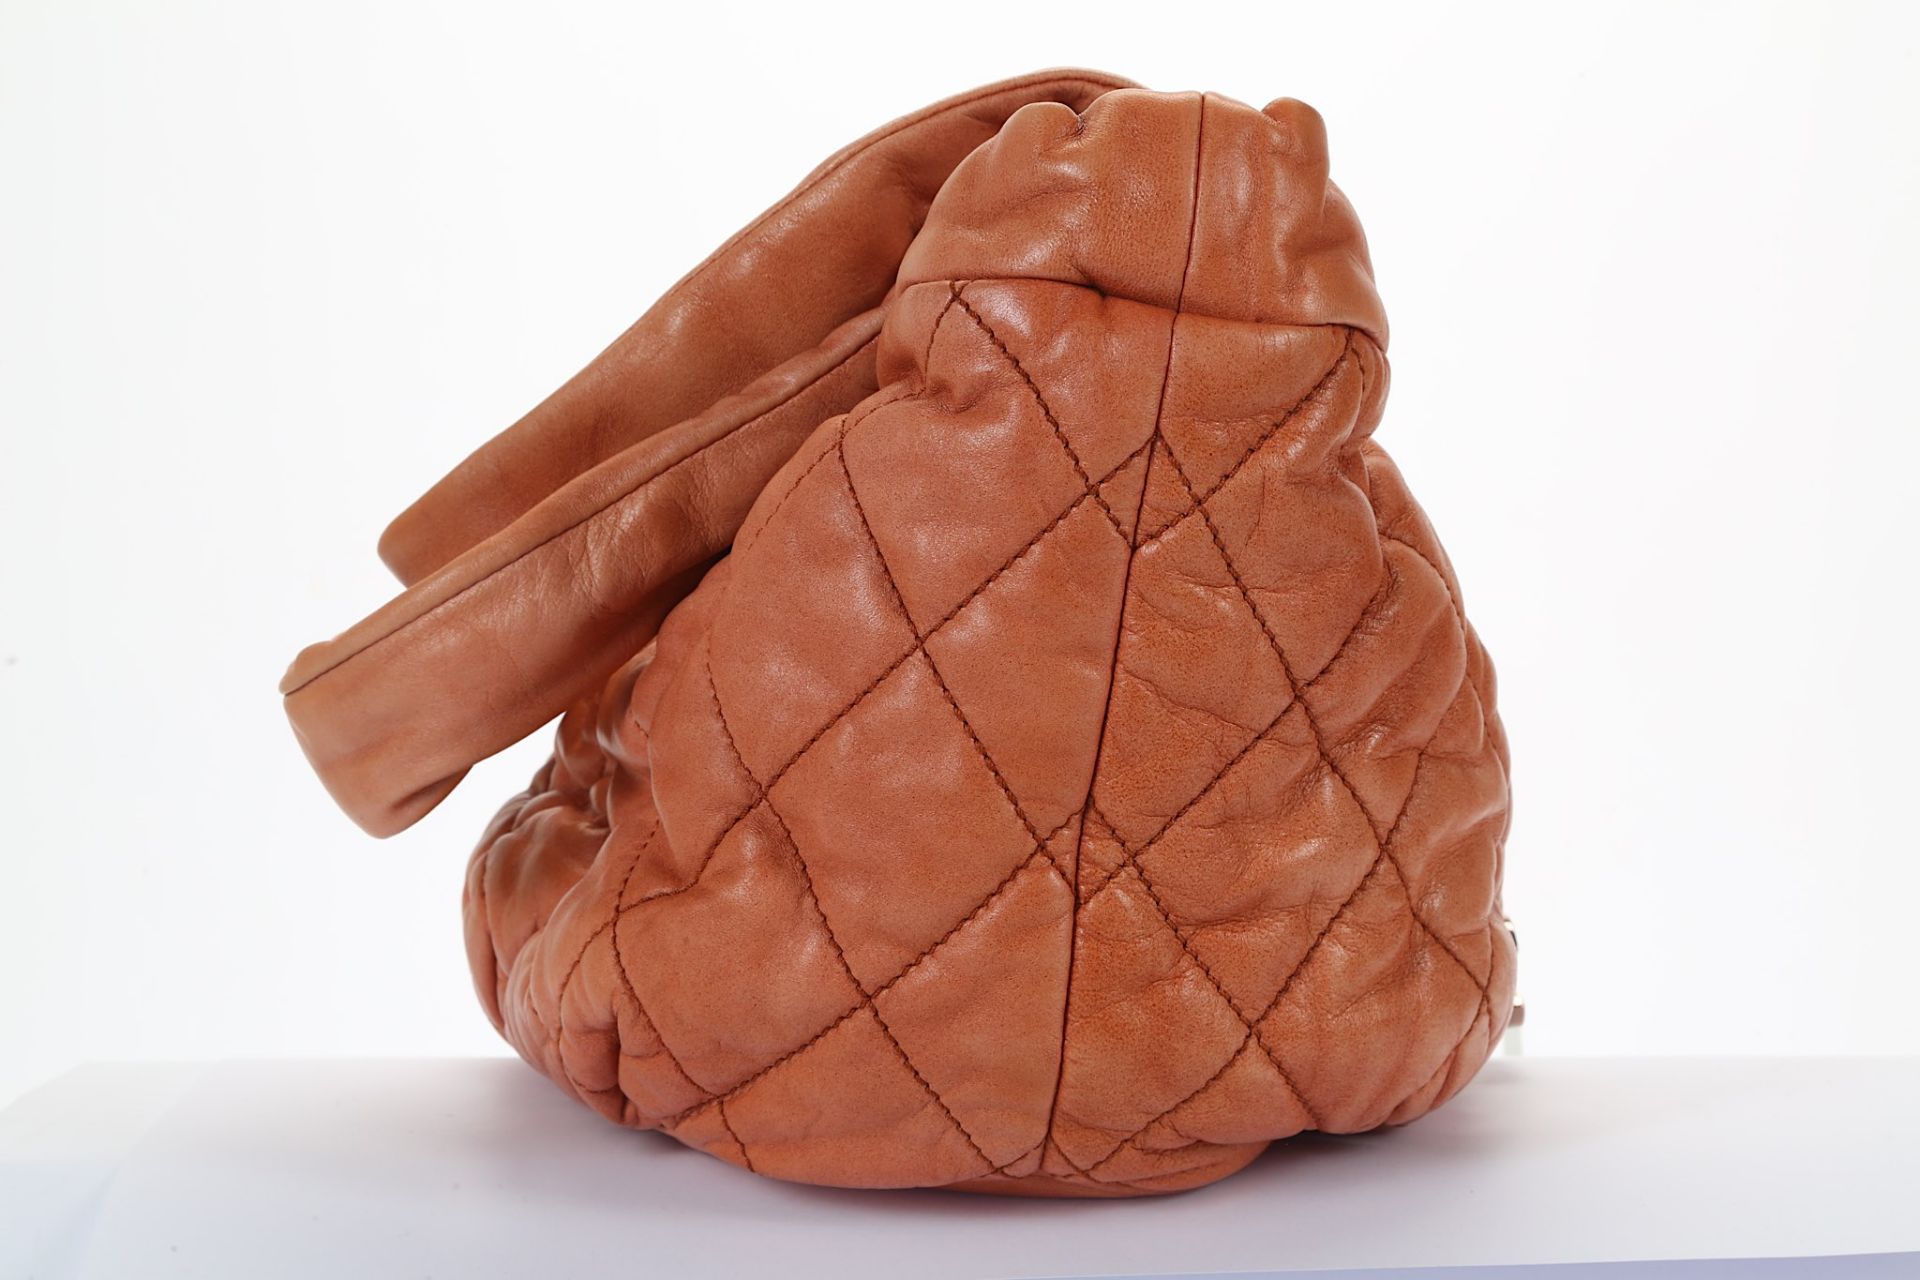 Chanel Coral Leather Shoulder Bag, c. 2005-06, puf - Image 4 of 7